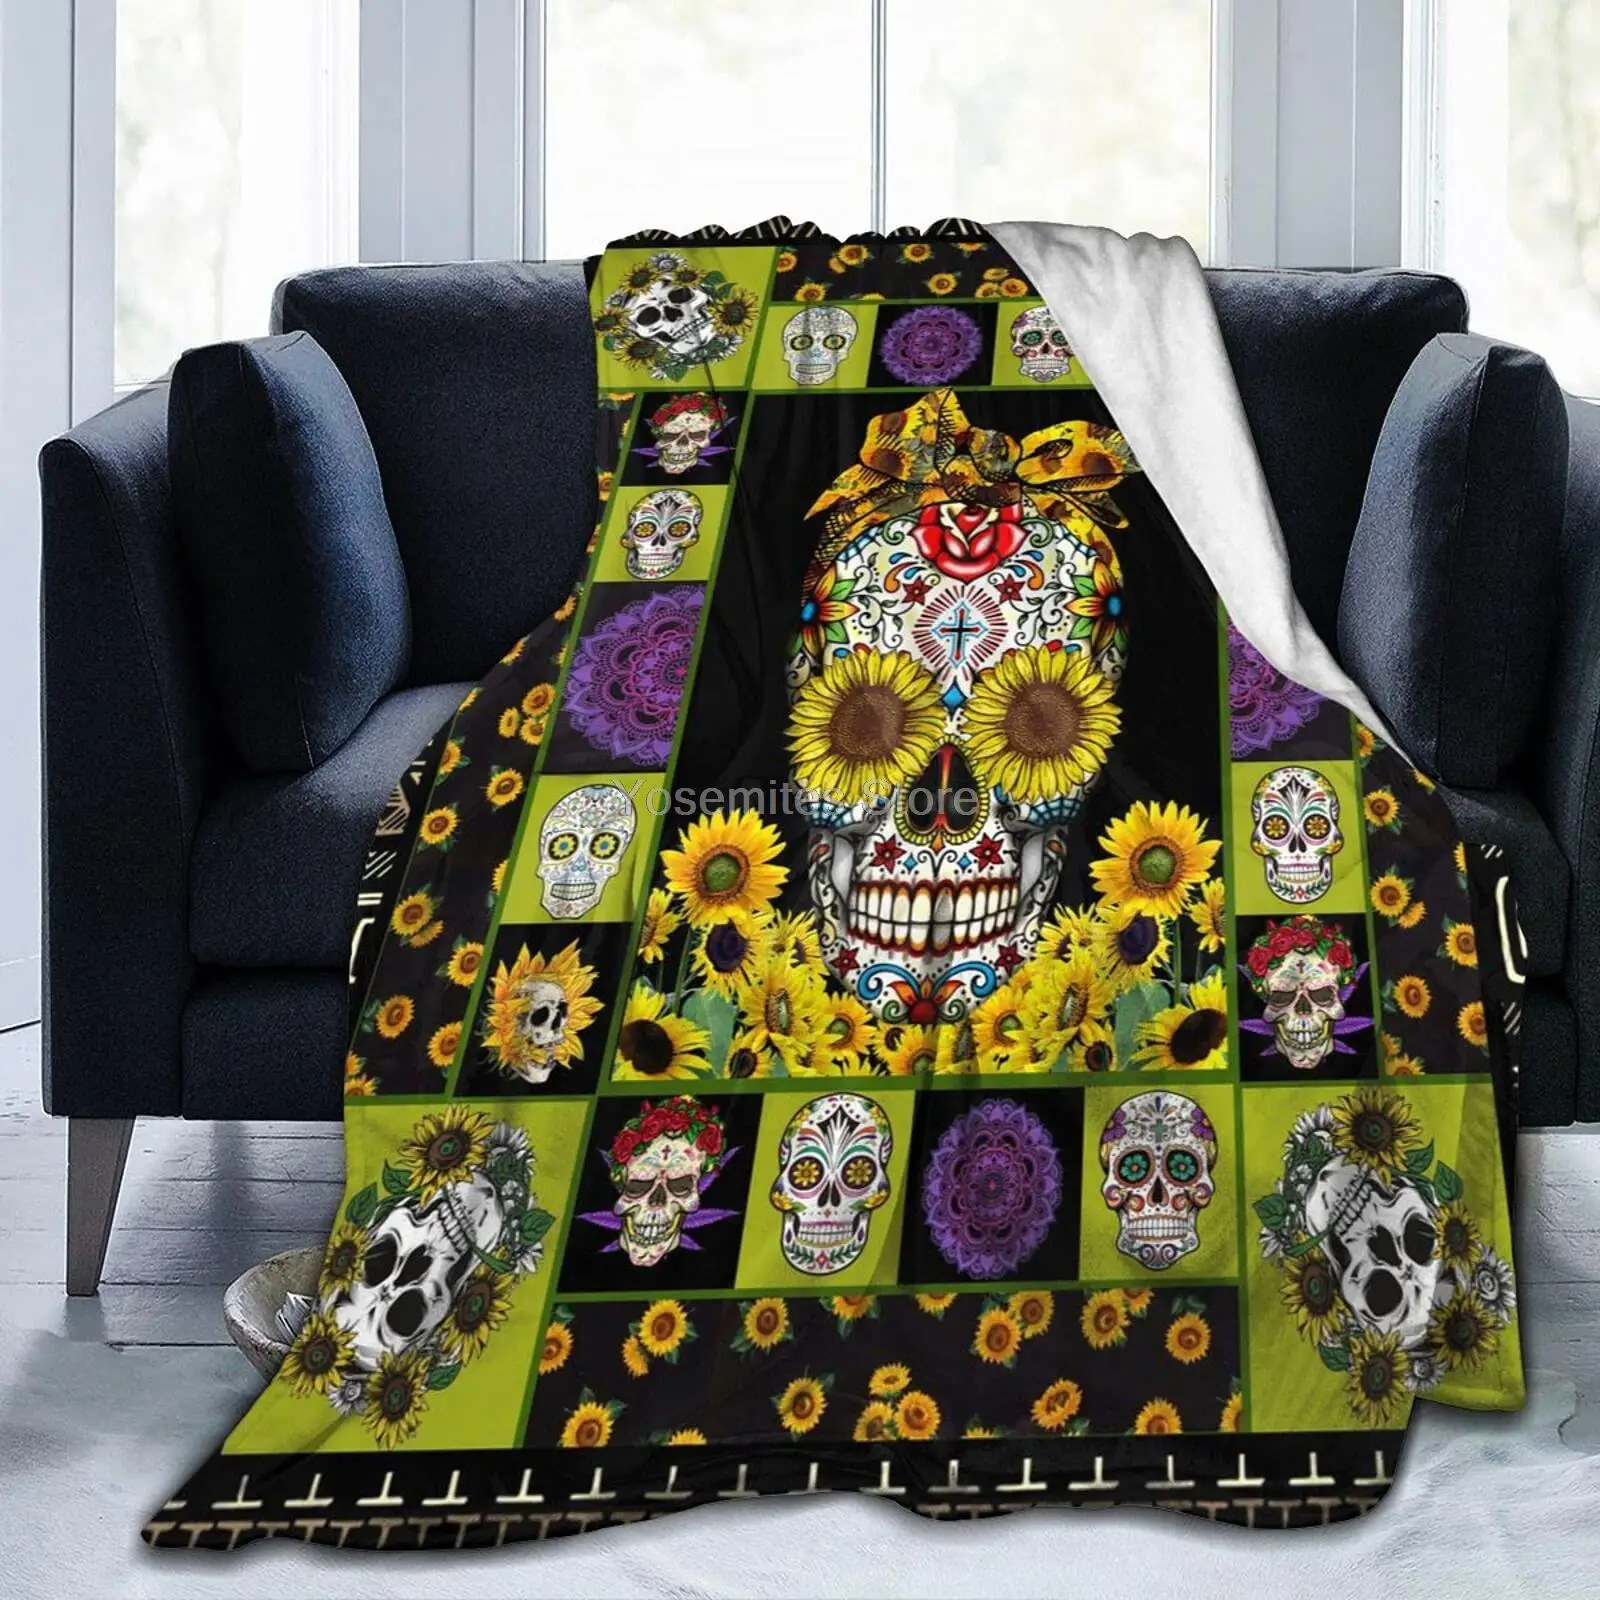 

Throw Blanket, Sunflower Sugar Skull Flannel Fleece Blanket for Couch Bed Sofa Ultra Soft Cozy Warm Plush Microfiber Blank